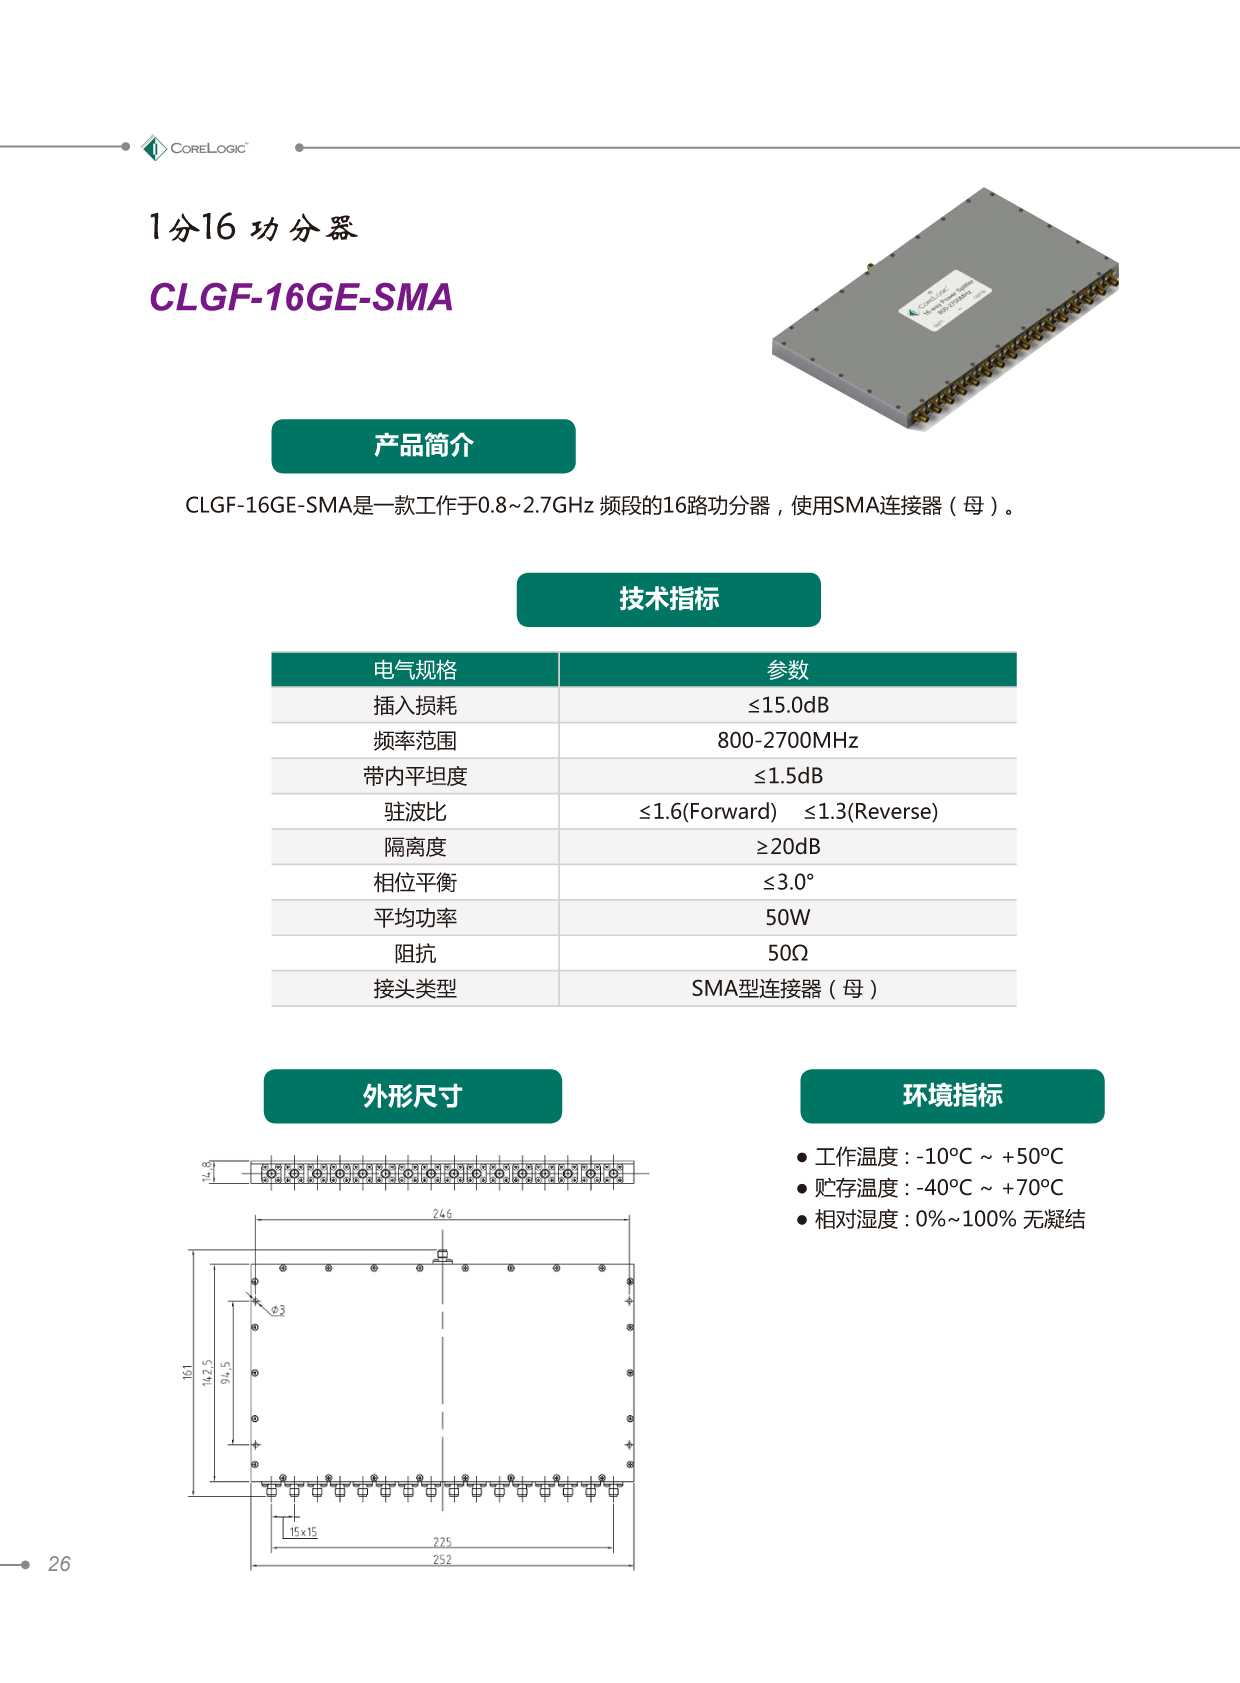 clgf-16ge-sma产品详情